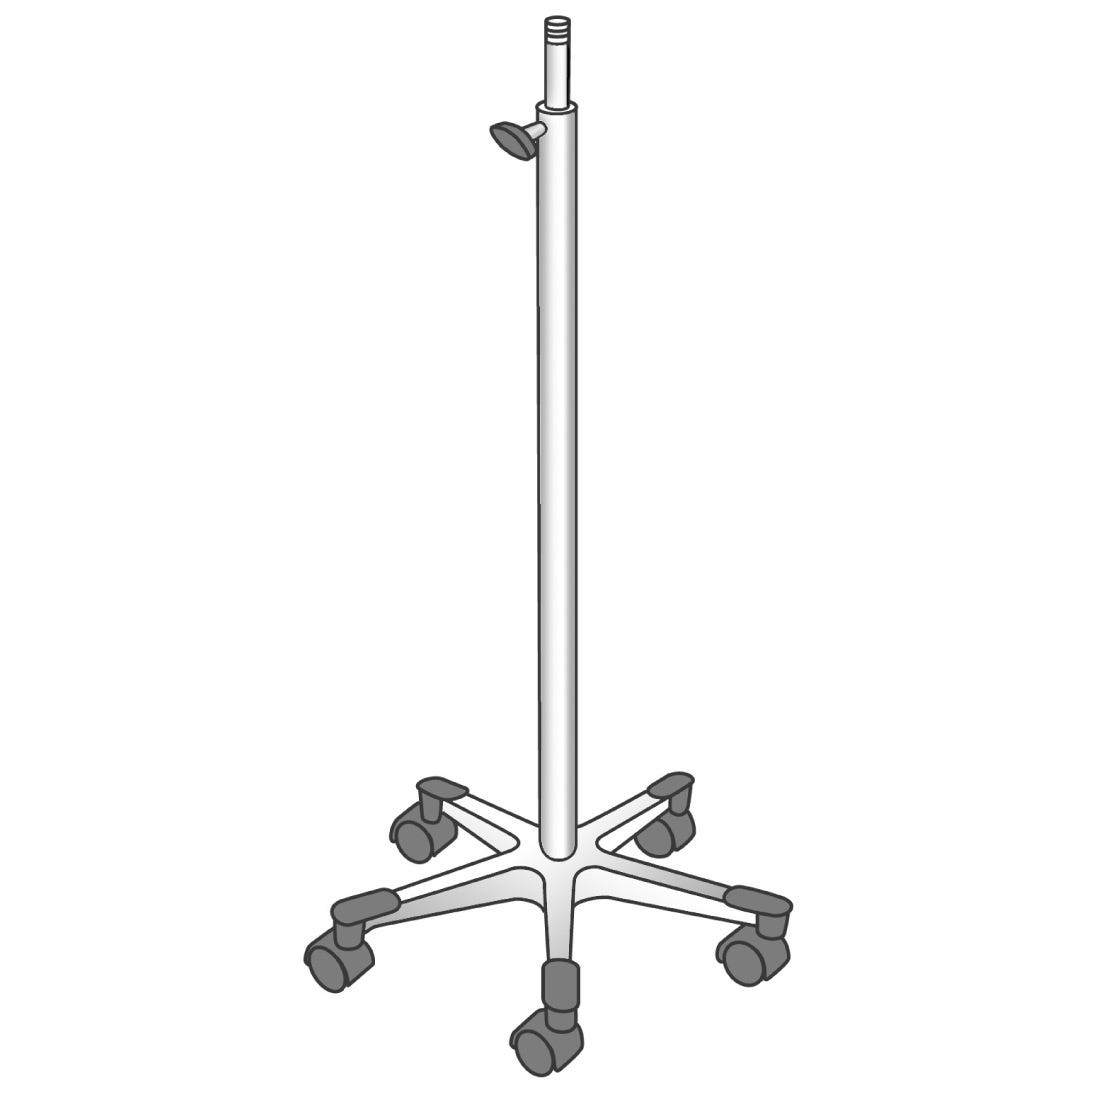 Matrx Tall Adjustable Mobile Stand